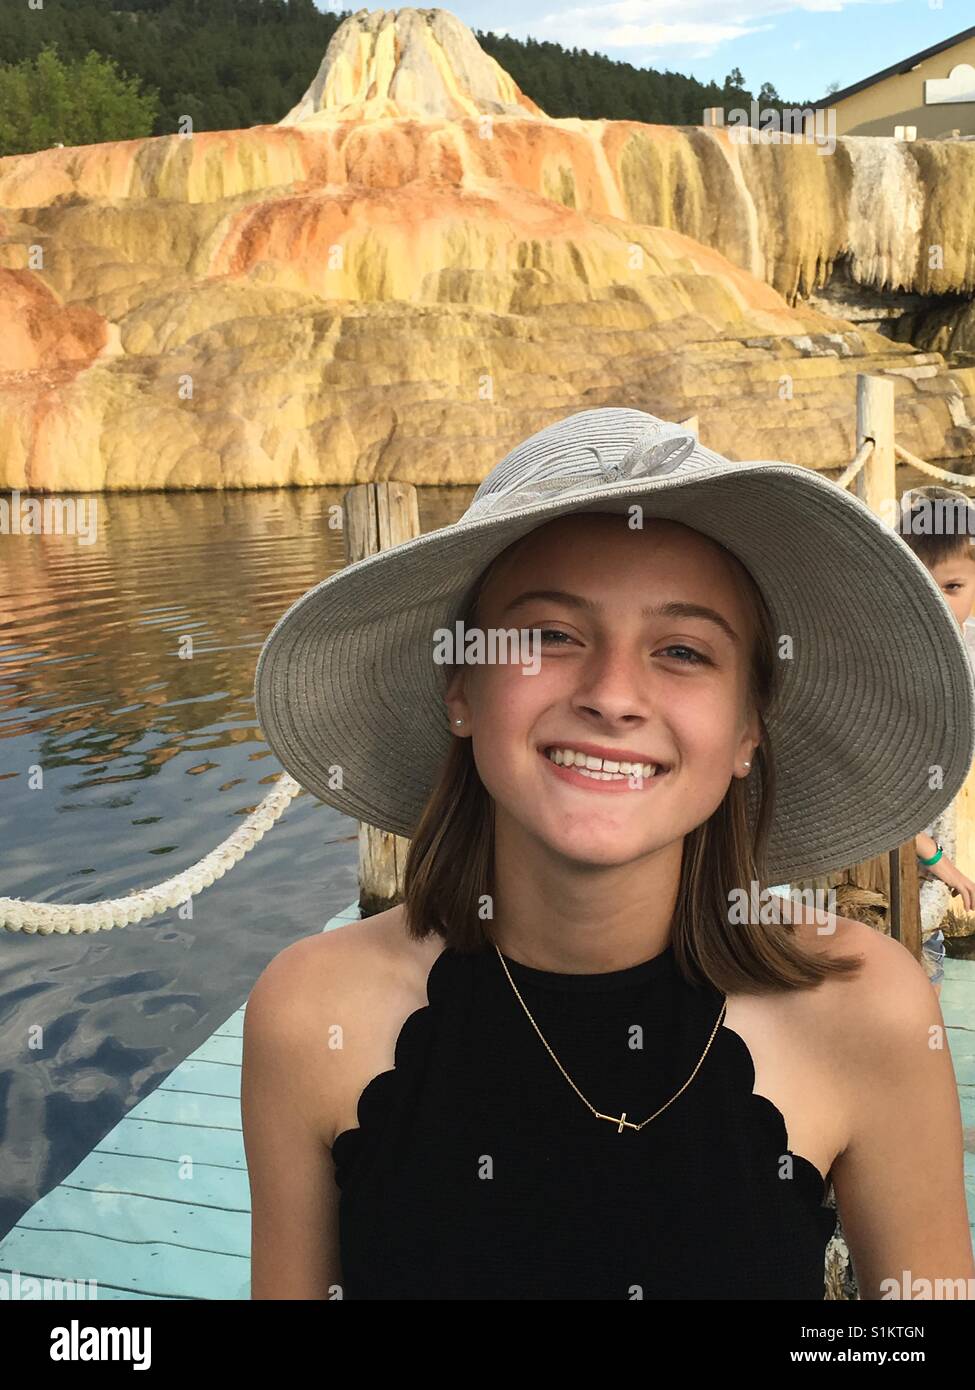 Young Girl in Big Hat Enjoying Summer Hot Springs Stock Photo